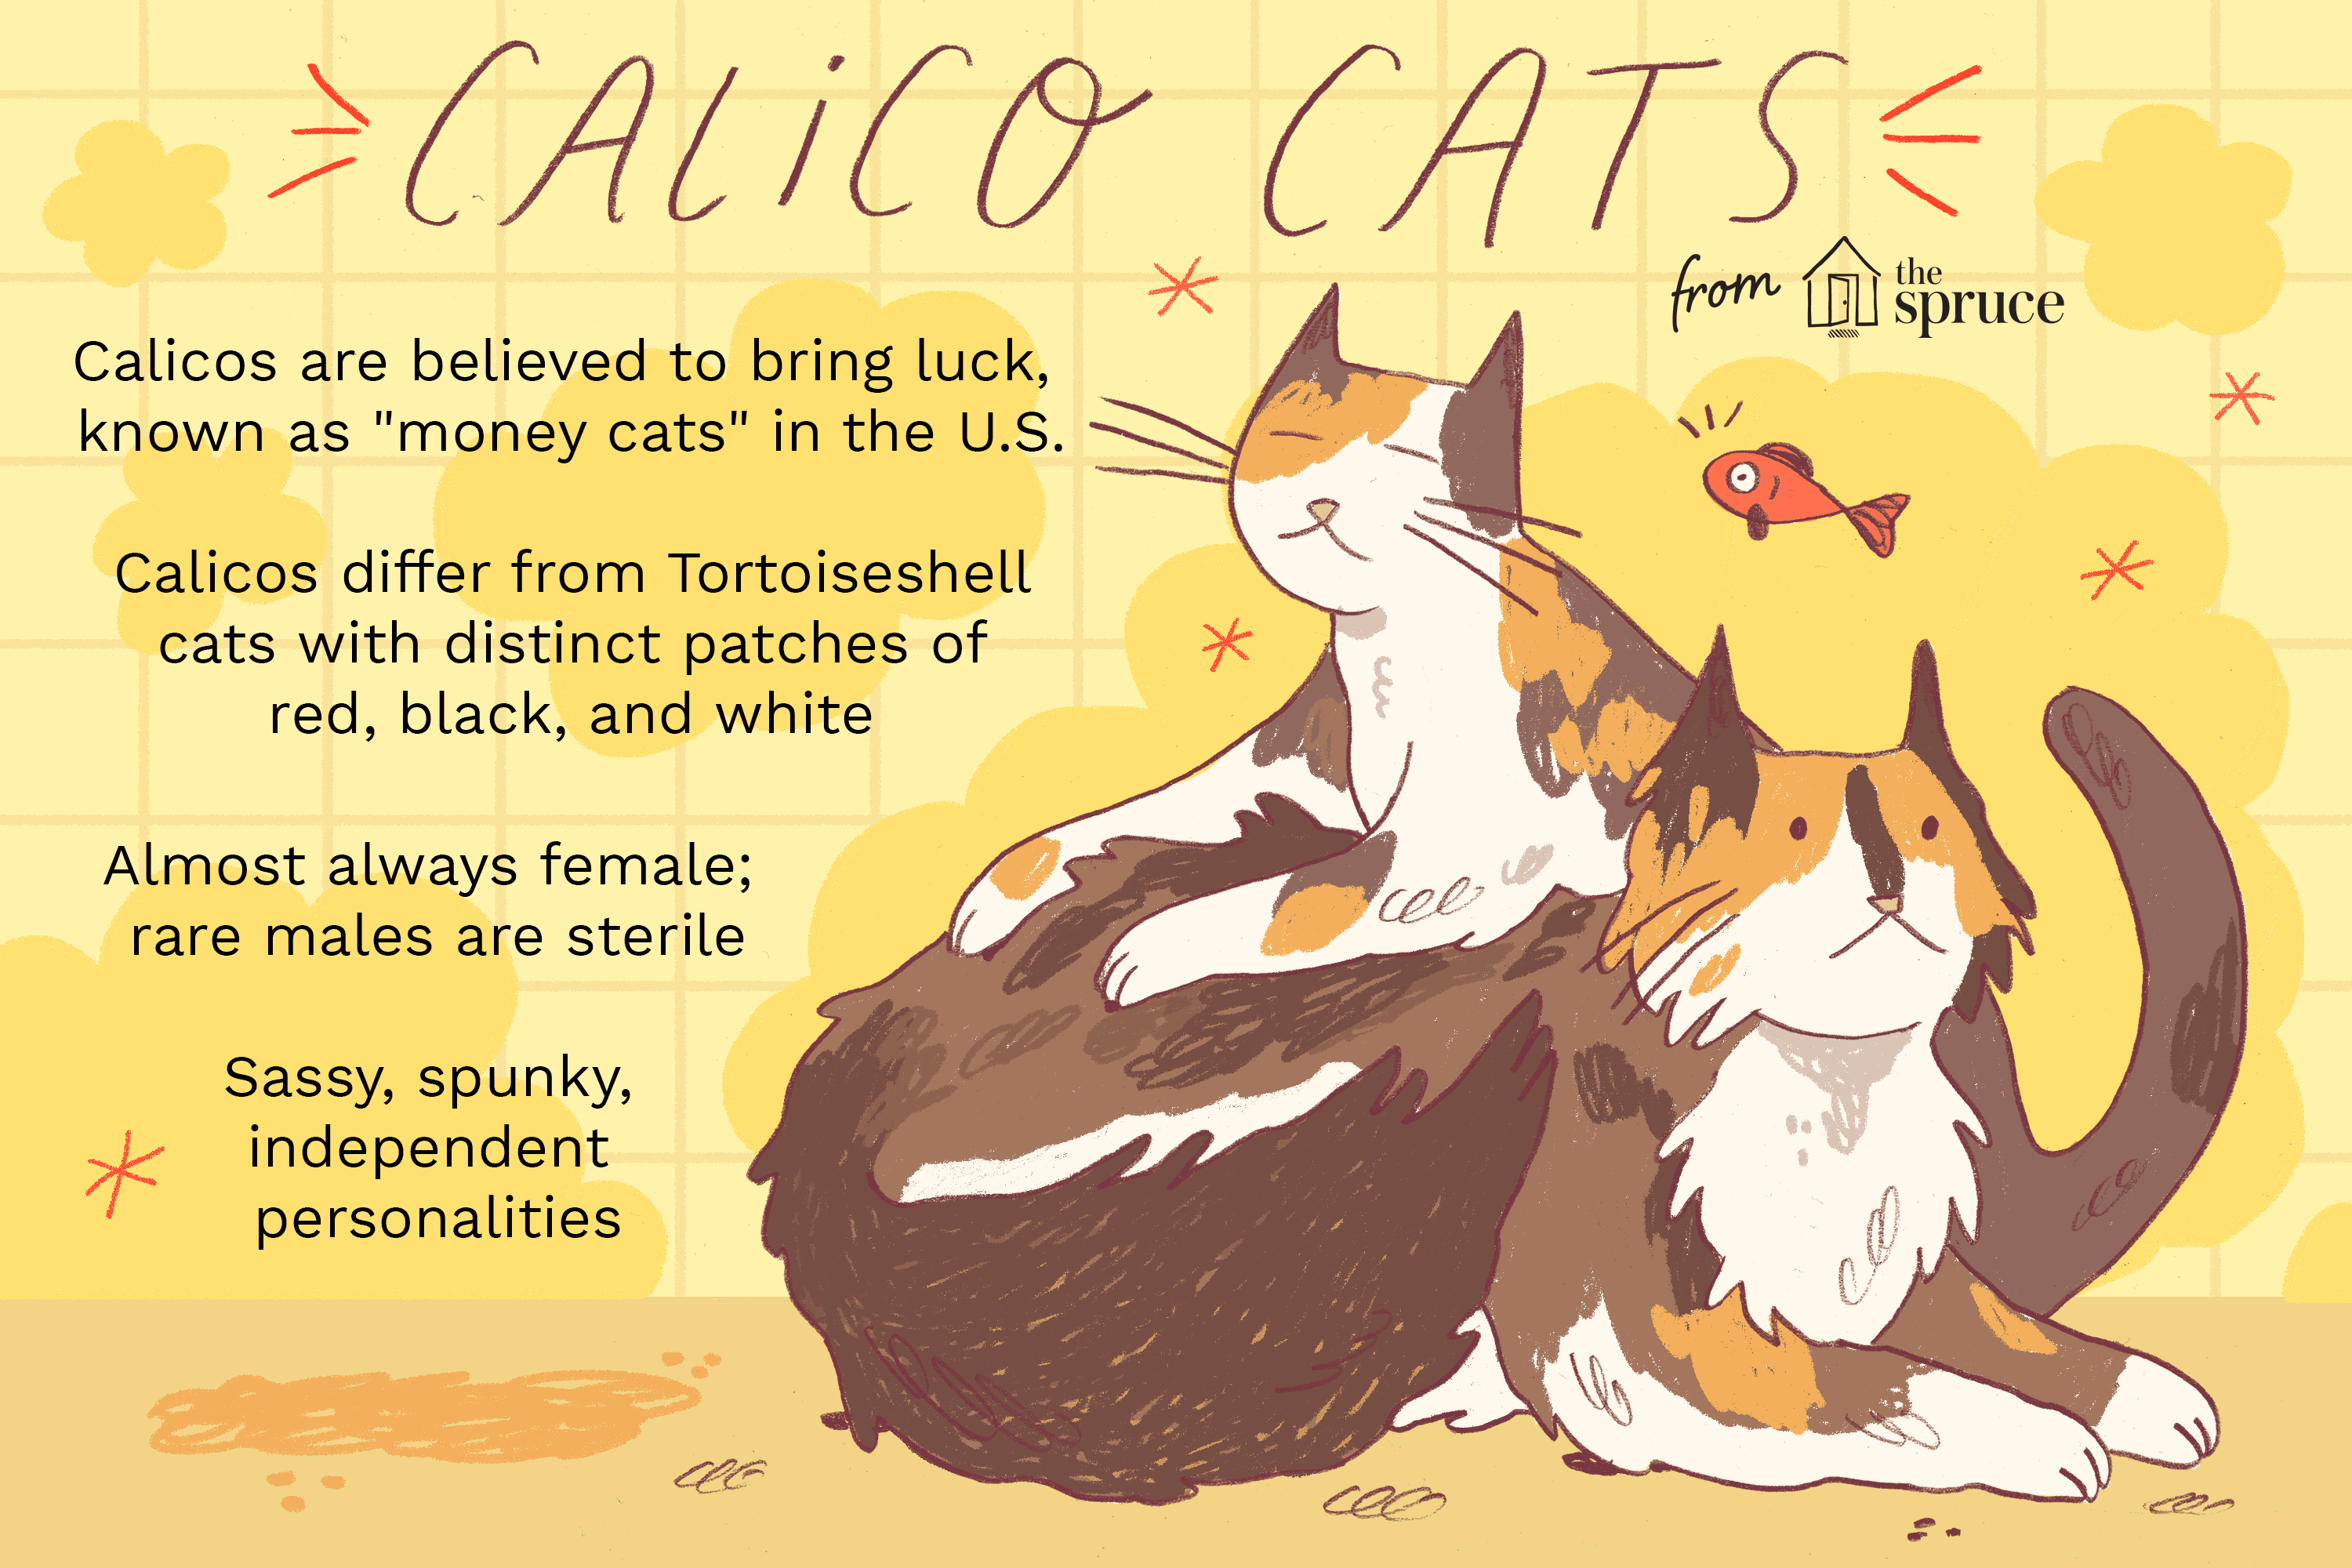 Profil des chats Calico